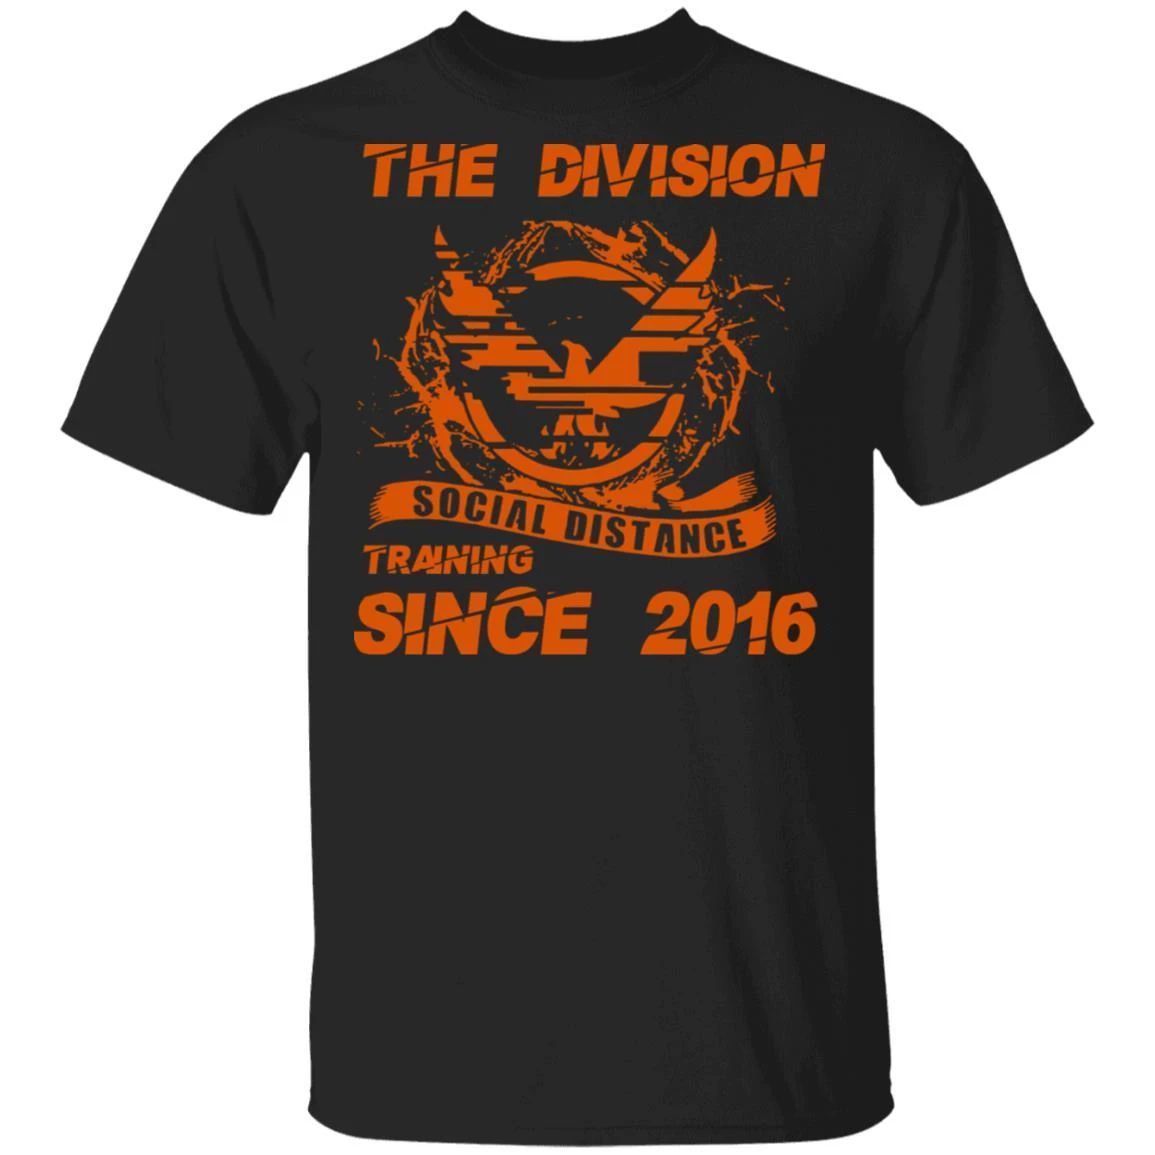 The Division Social Distance Since 2016 T-shirt